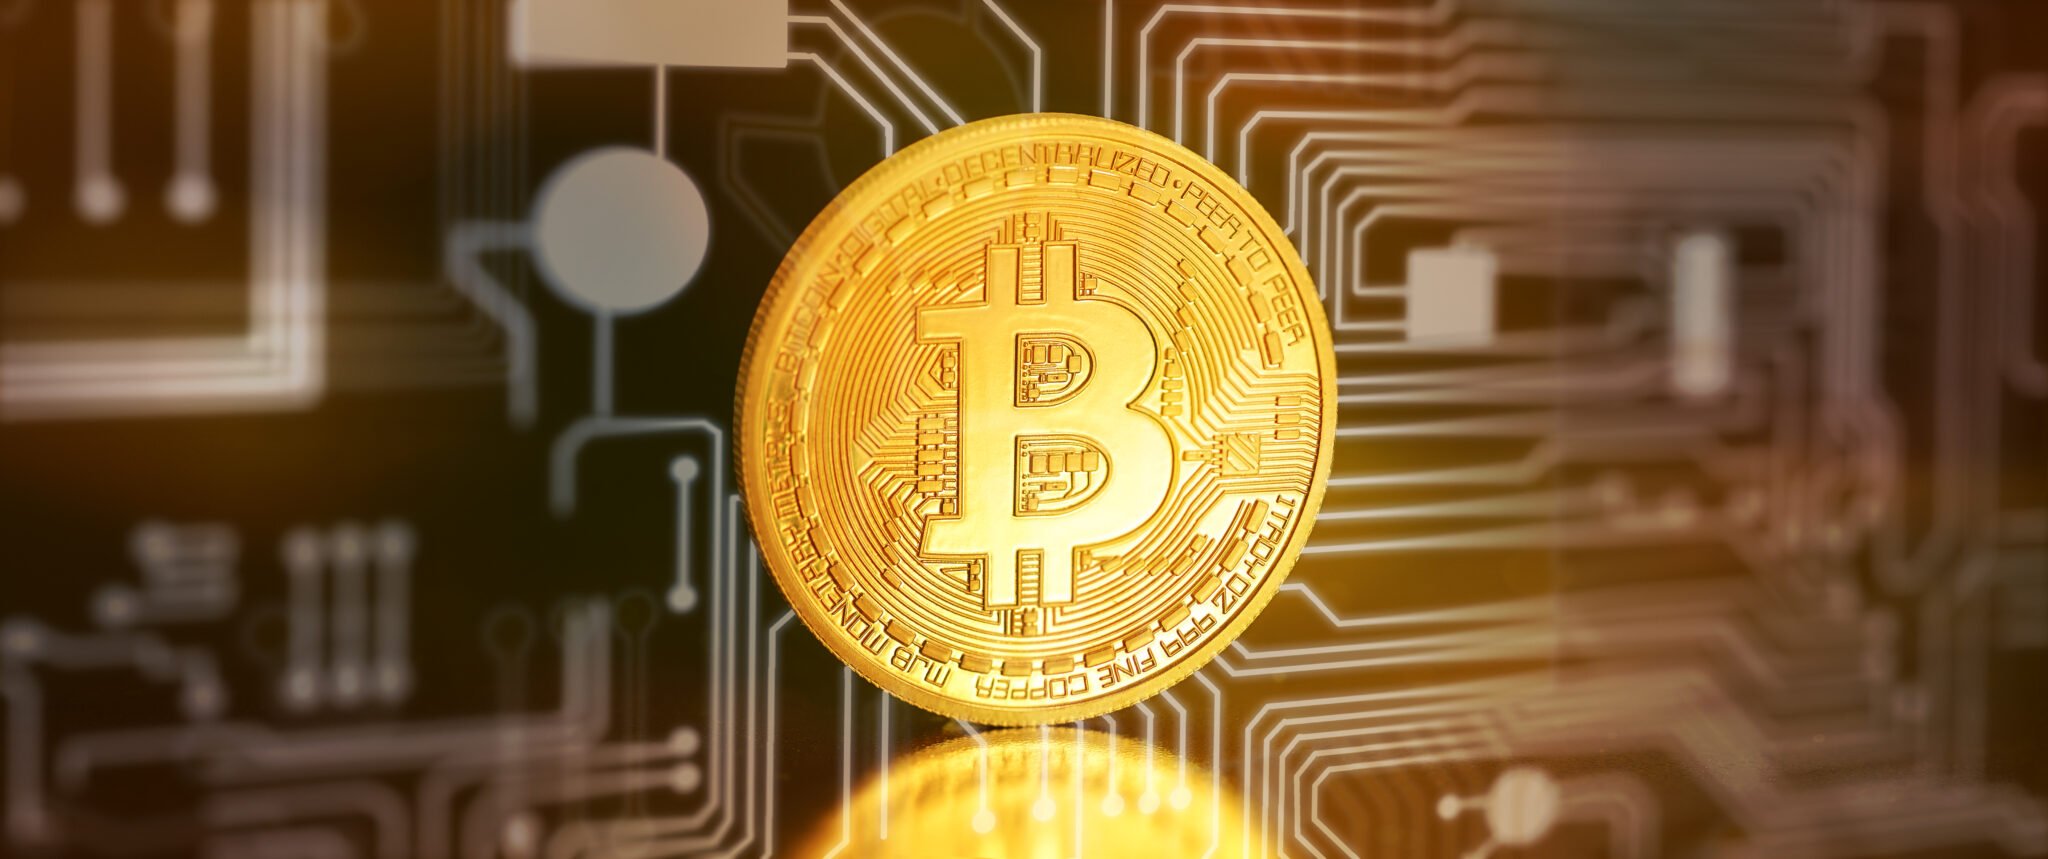 bitcoins - bit coin BTC the new virtual money